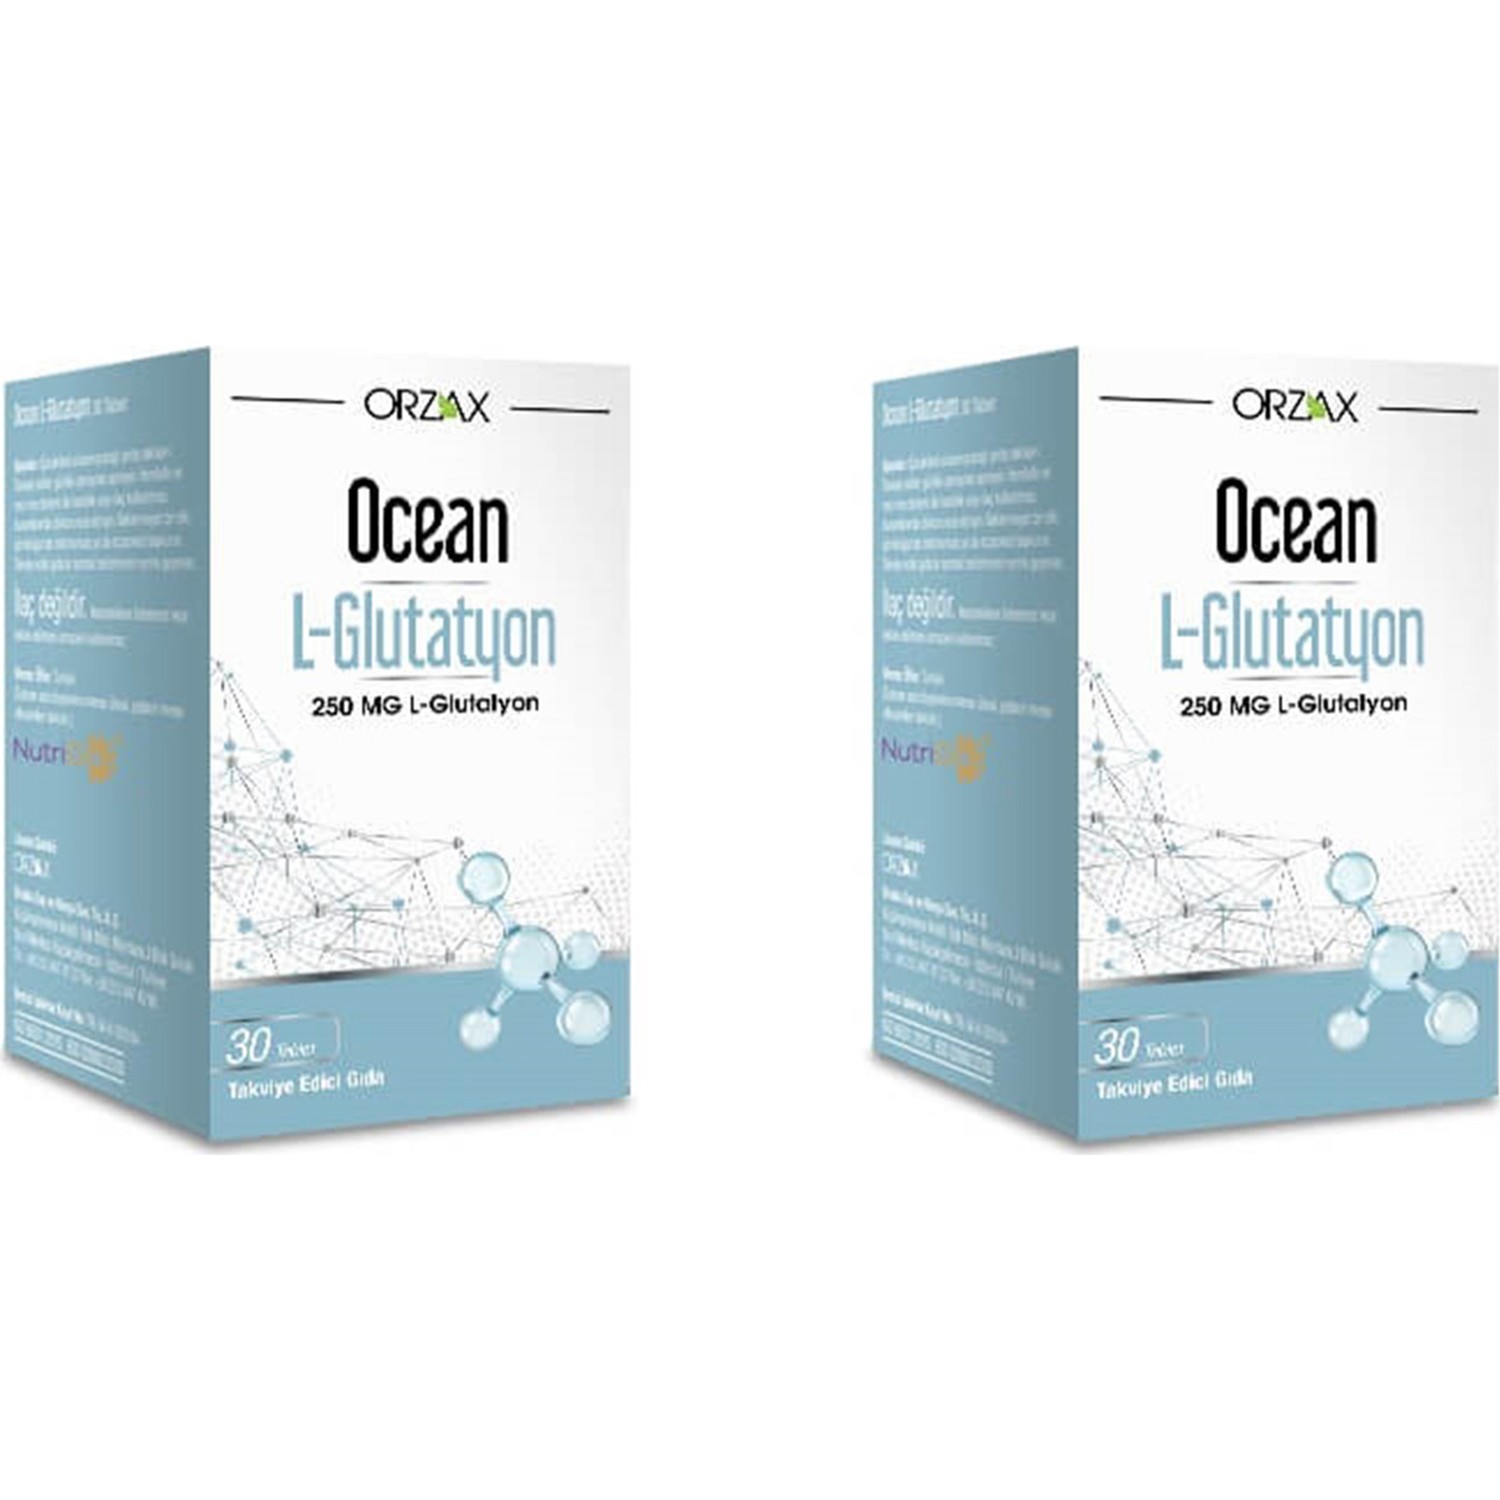 L-глутатион Orzax Ocean 250 мг, 2 упаковки по 30 таблеток экстрамаг магния ocean 200 мг 4 упаковки по 60 таблеток